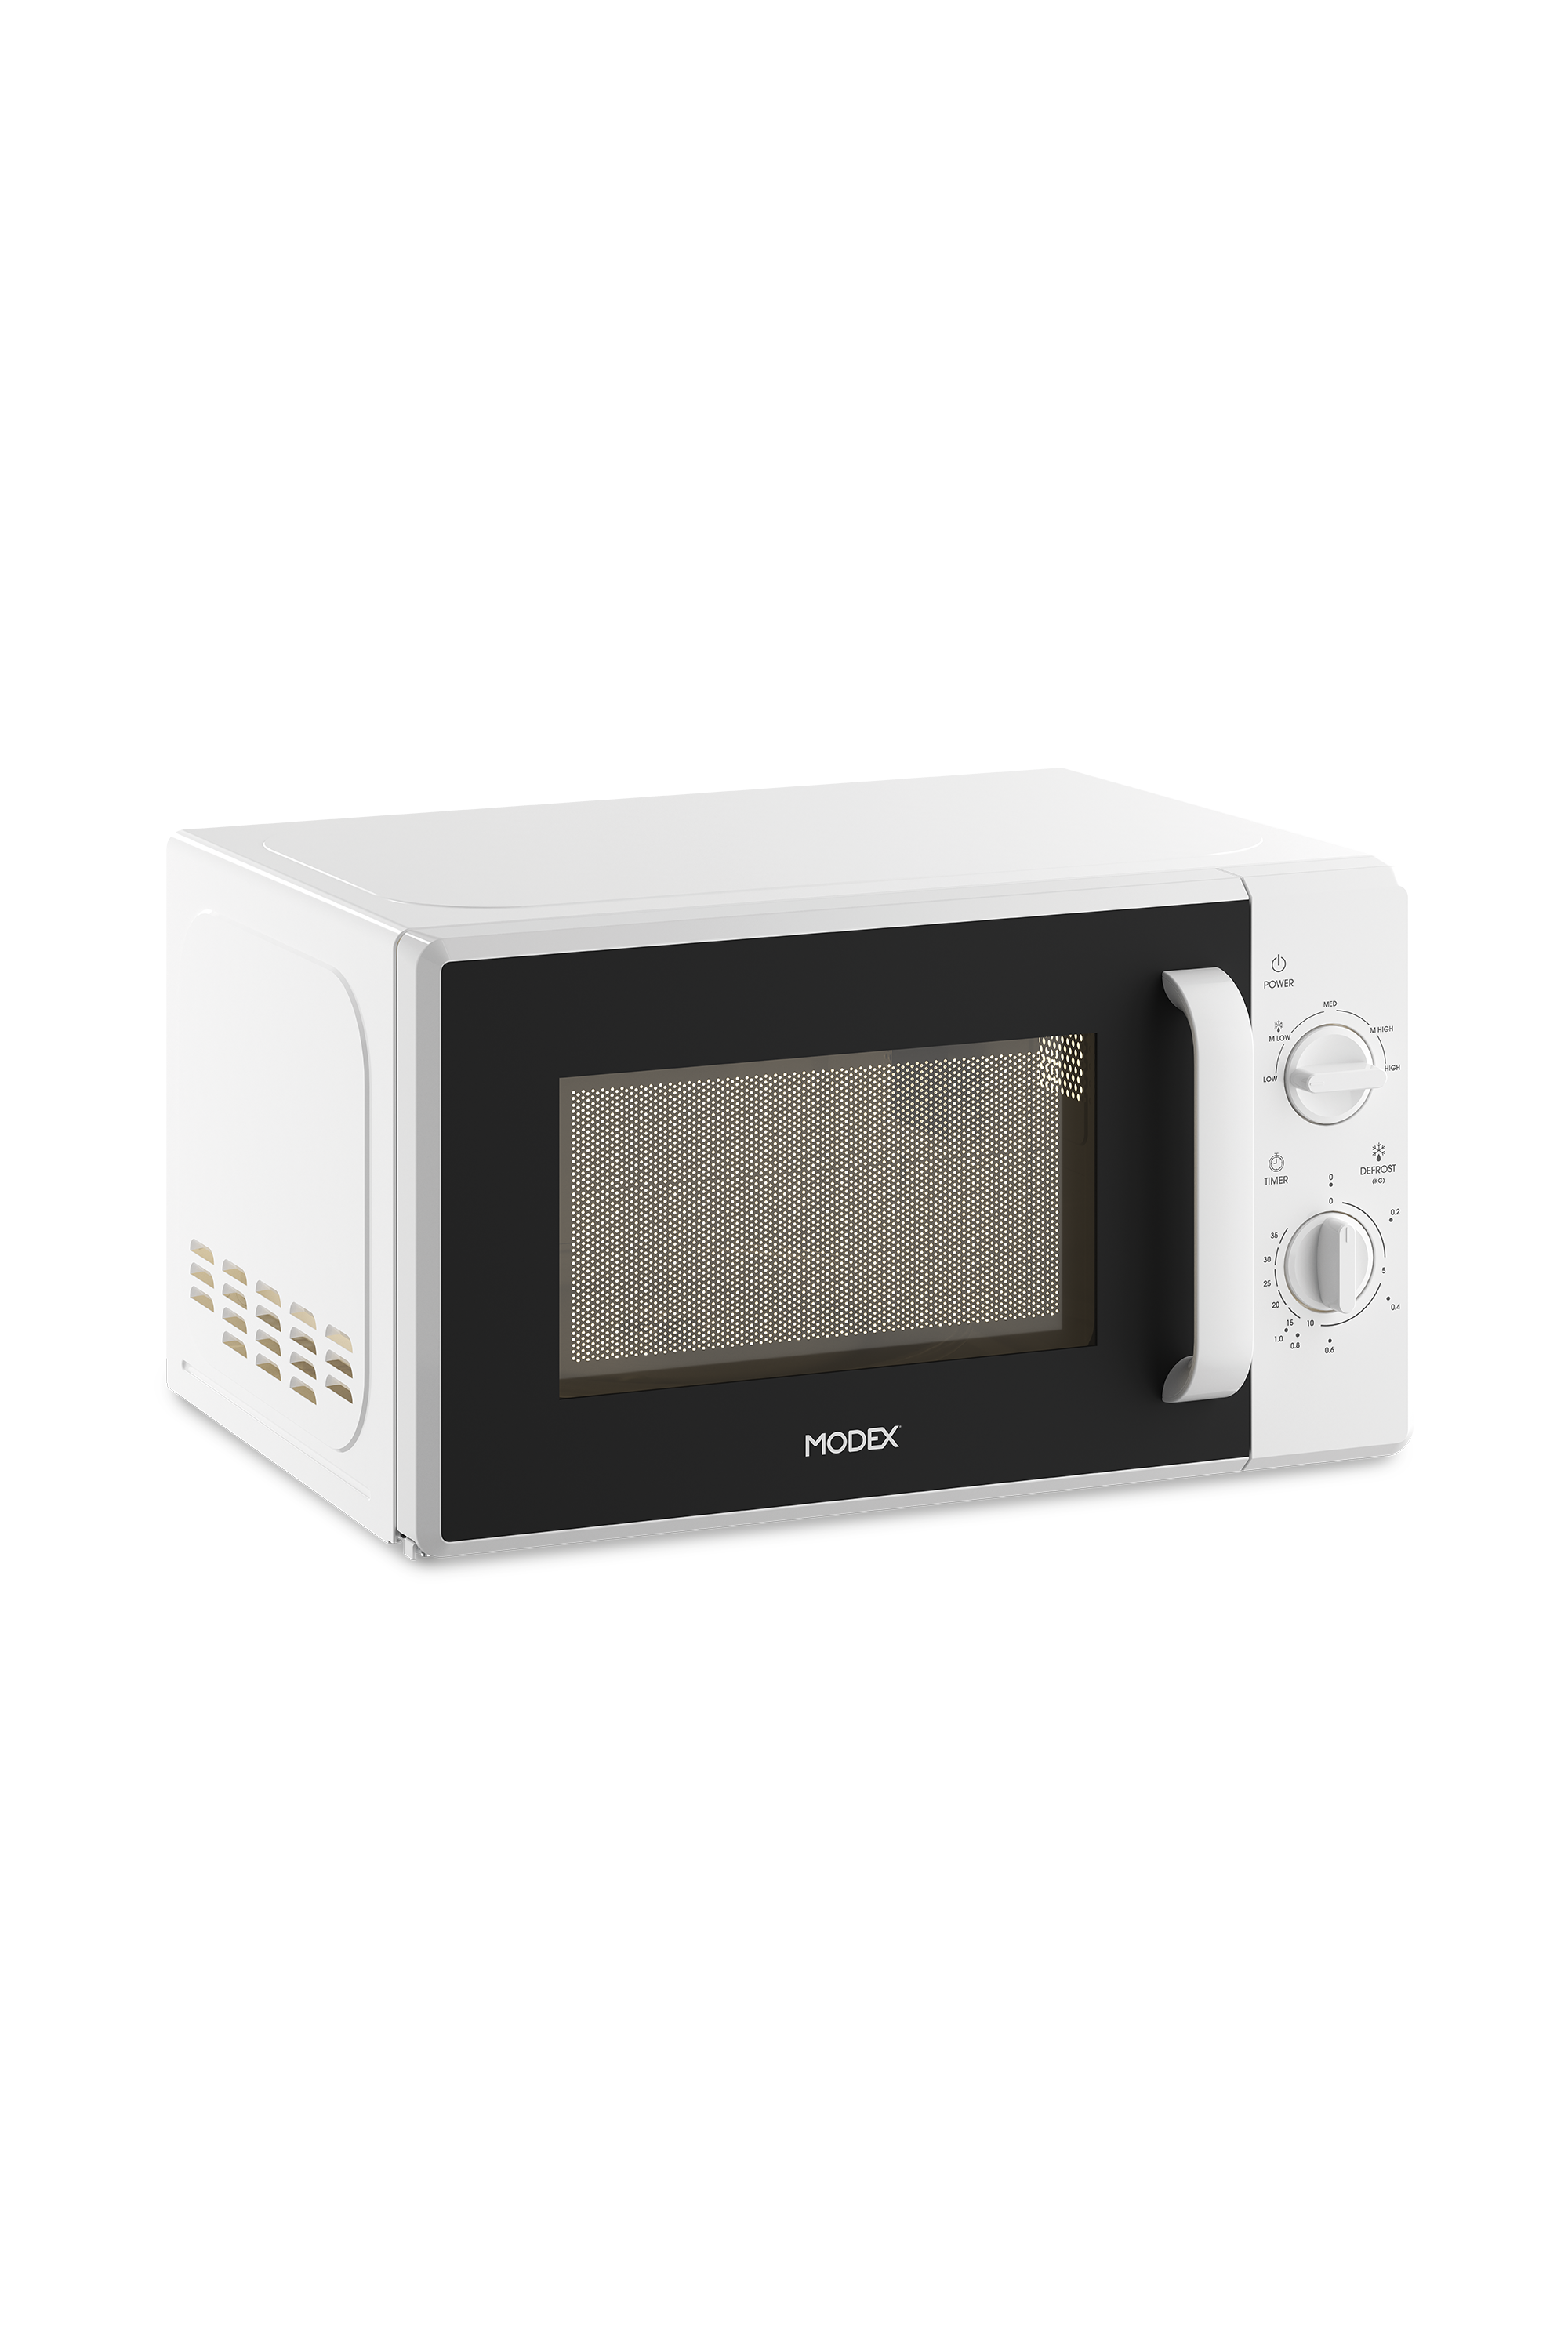 Mw1720 Microwave